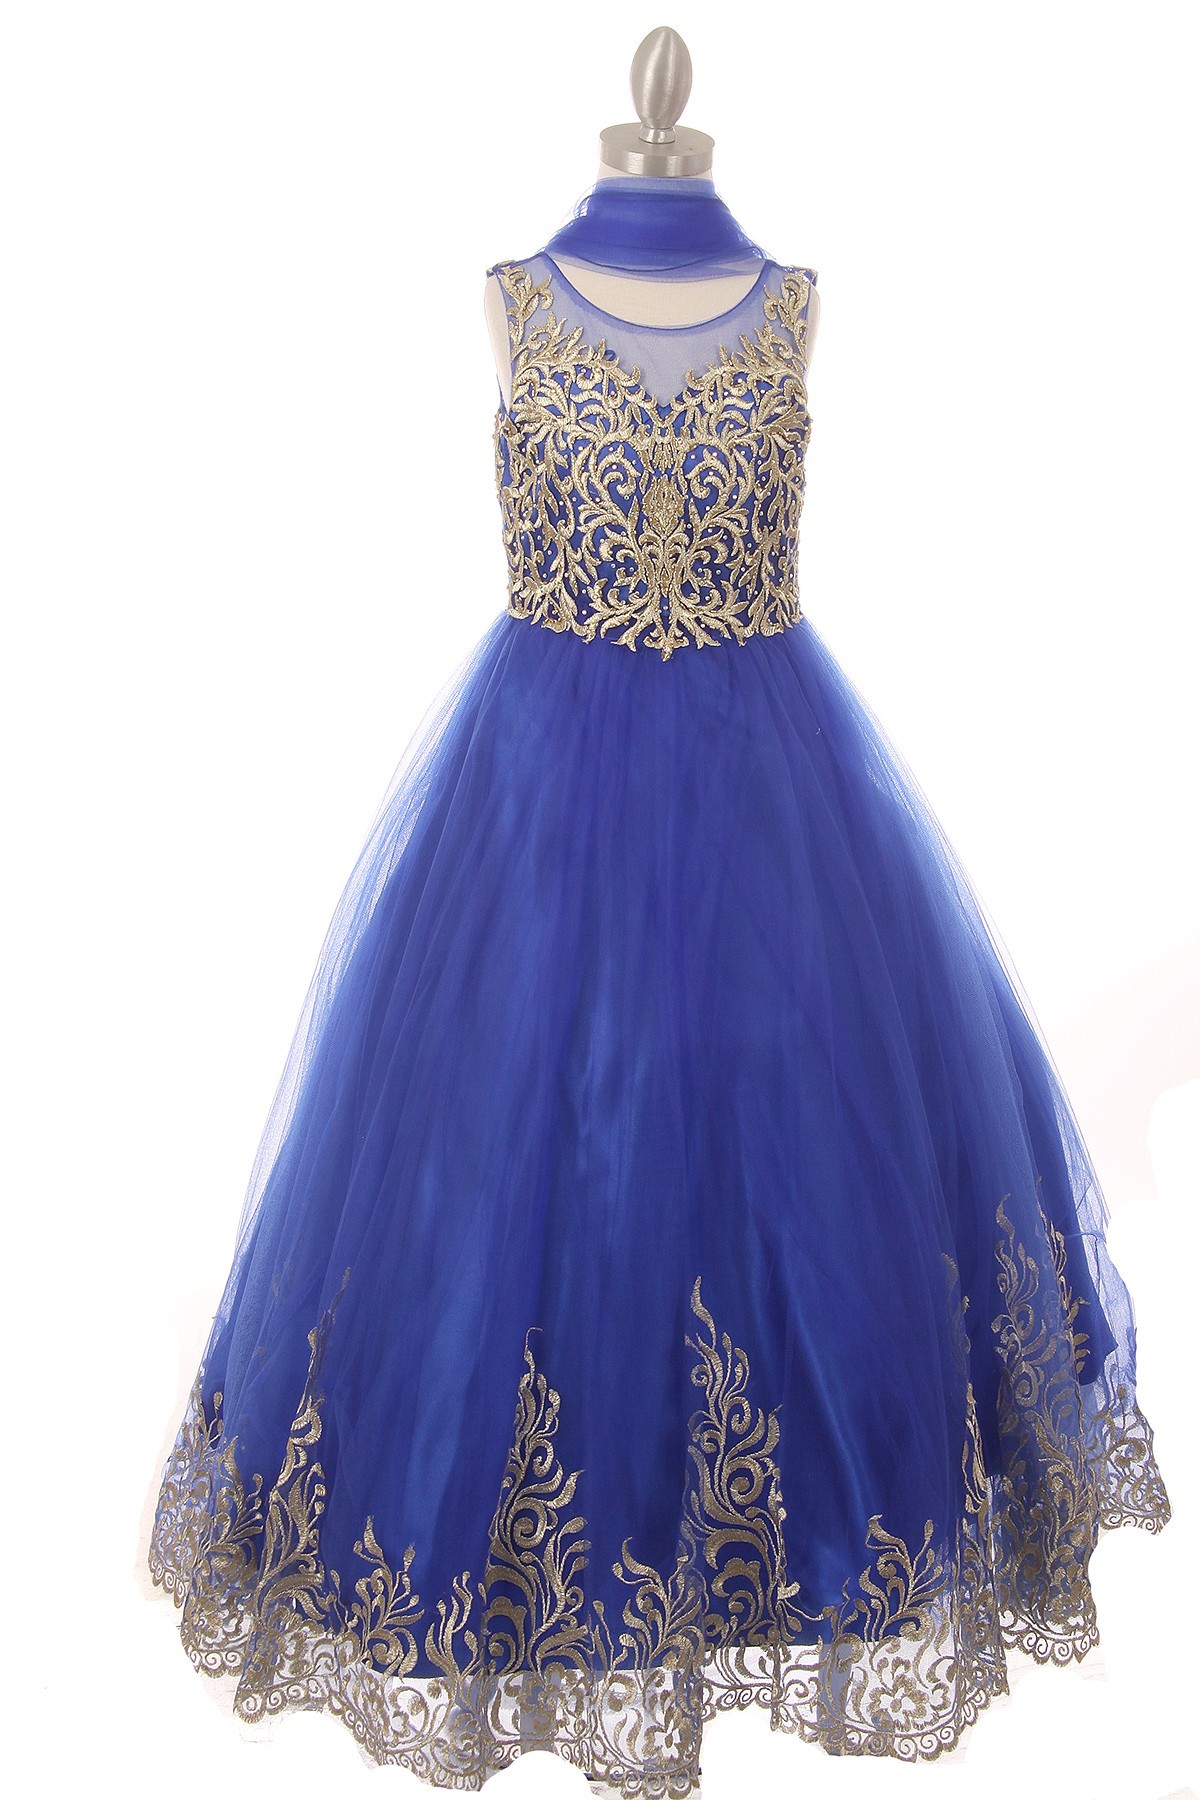 girls formal royal blue dress